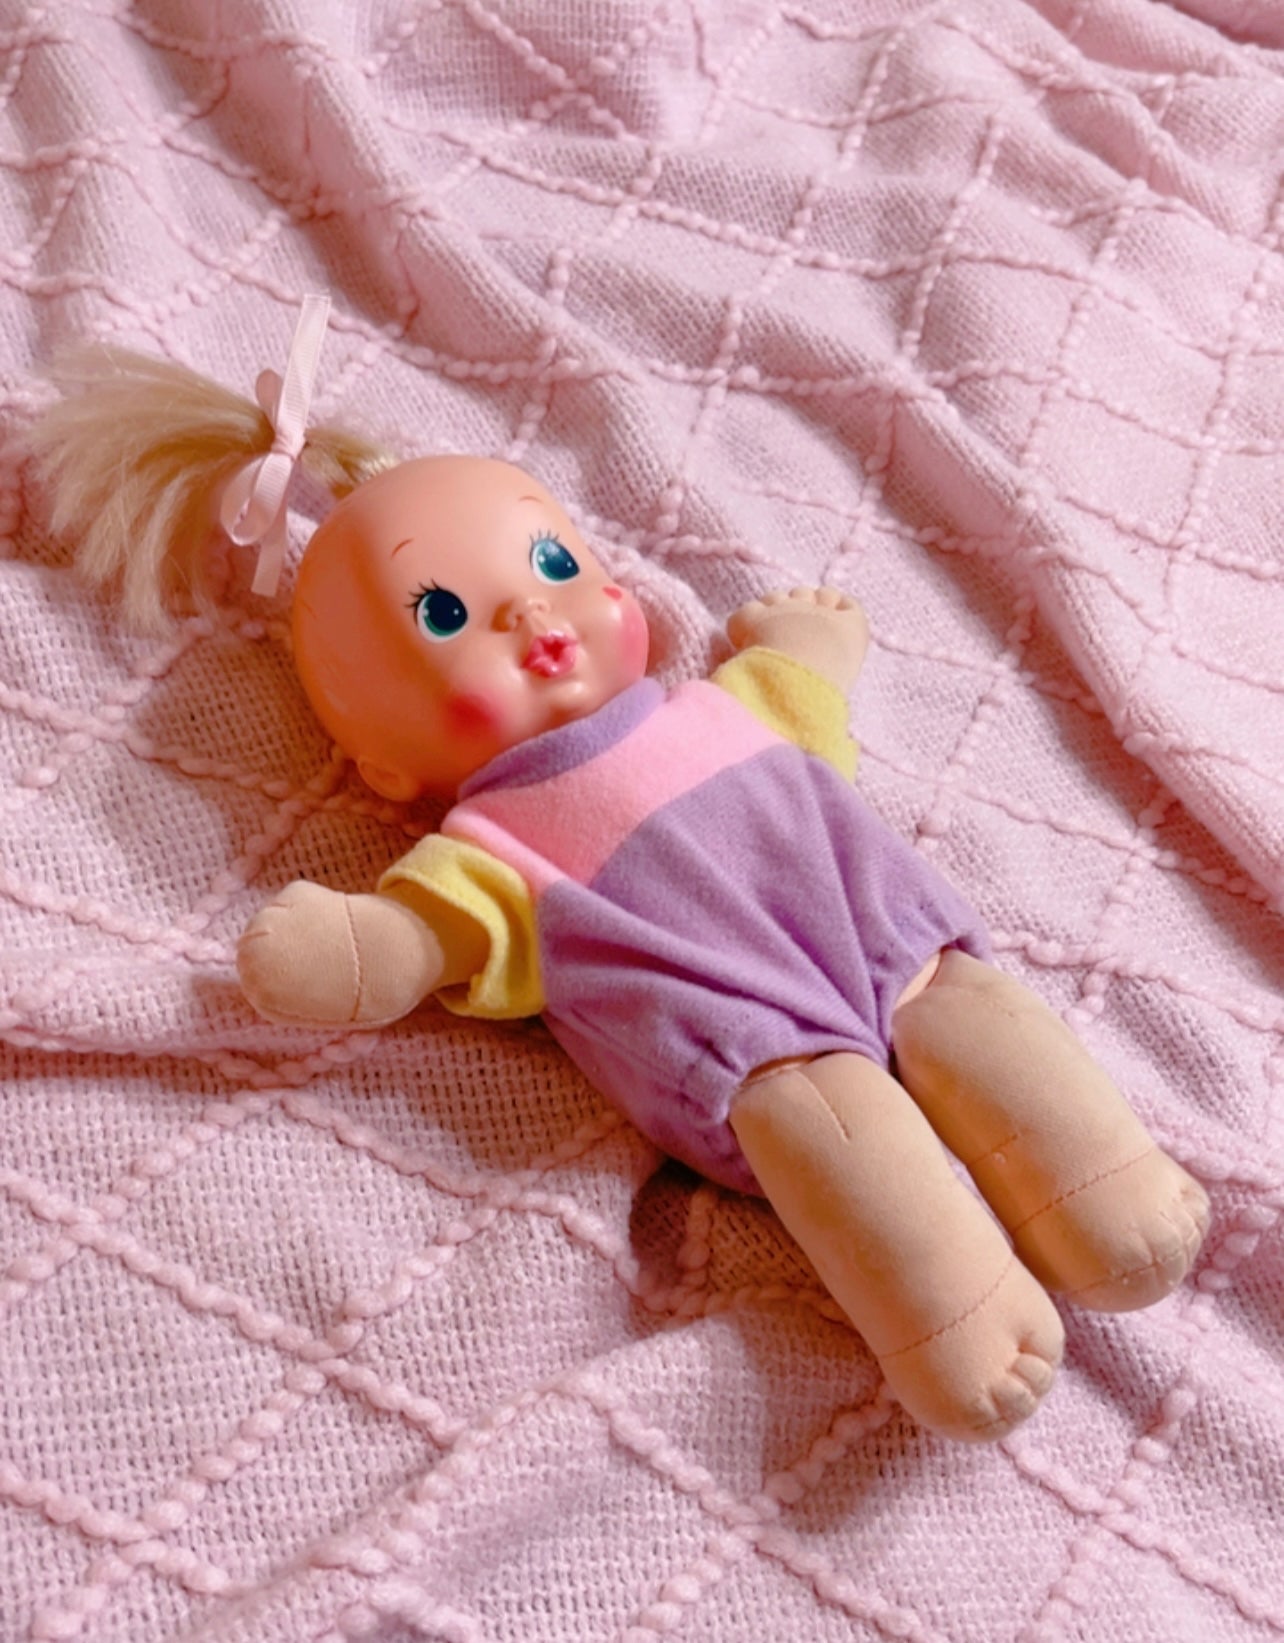 Magic Nursery Baby toy 1992